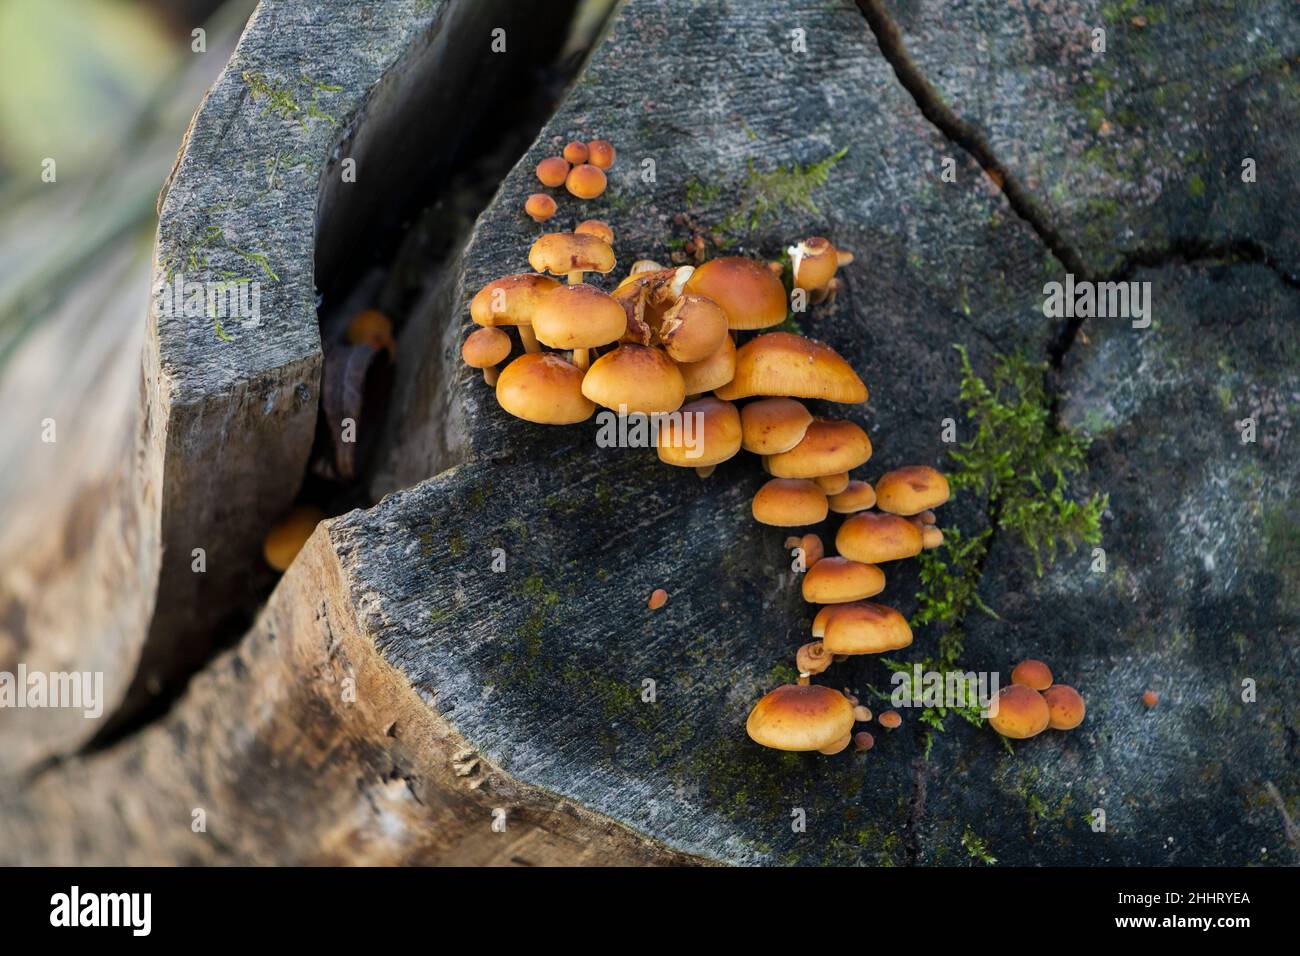 Fungi growing on felled tree, Scotland. Stock Photo